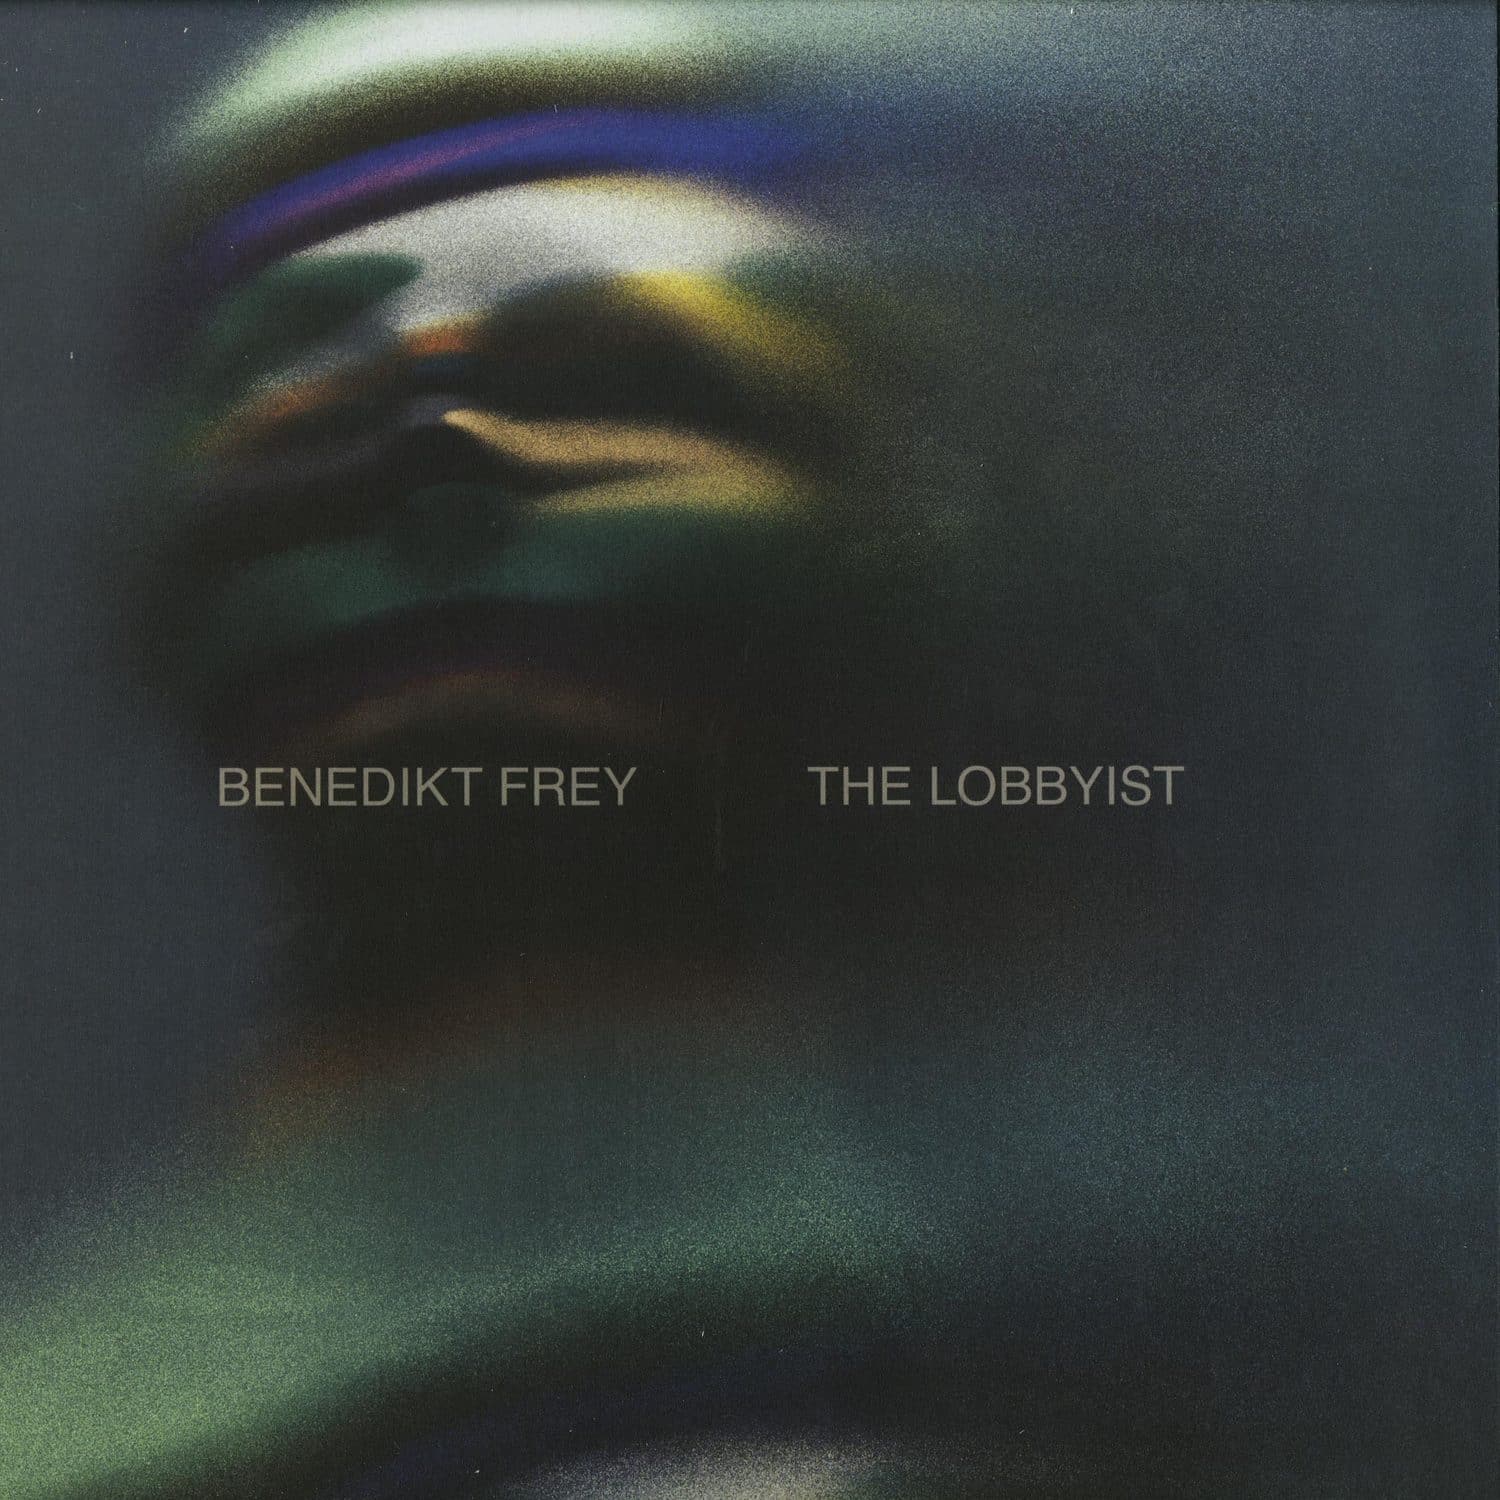 Benedikt Frey - THE LOBBYIST